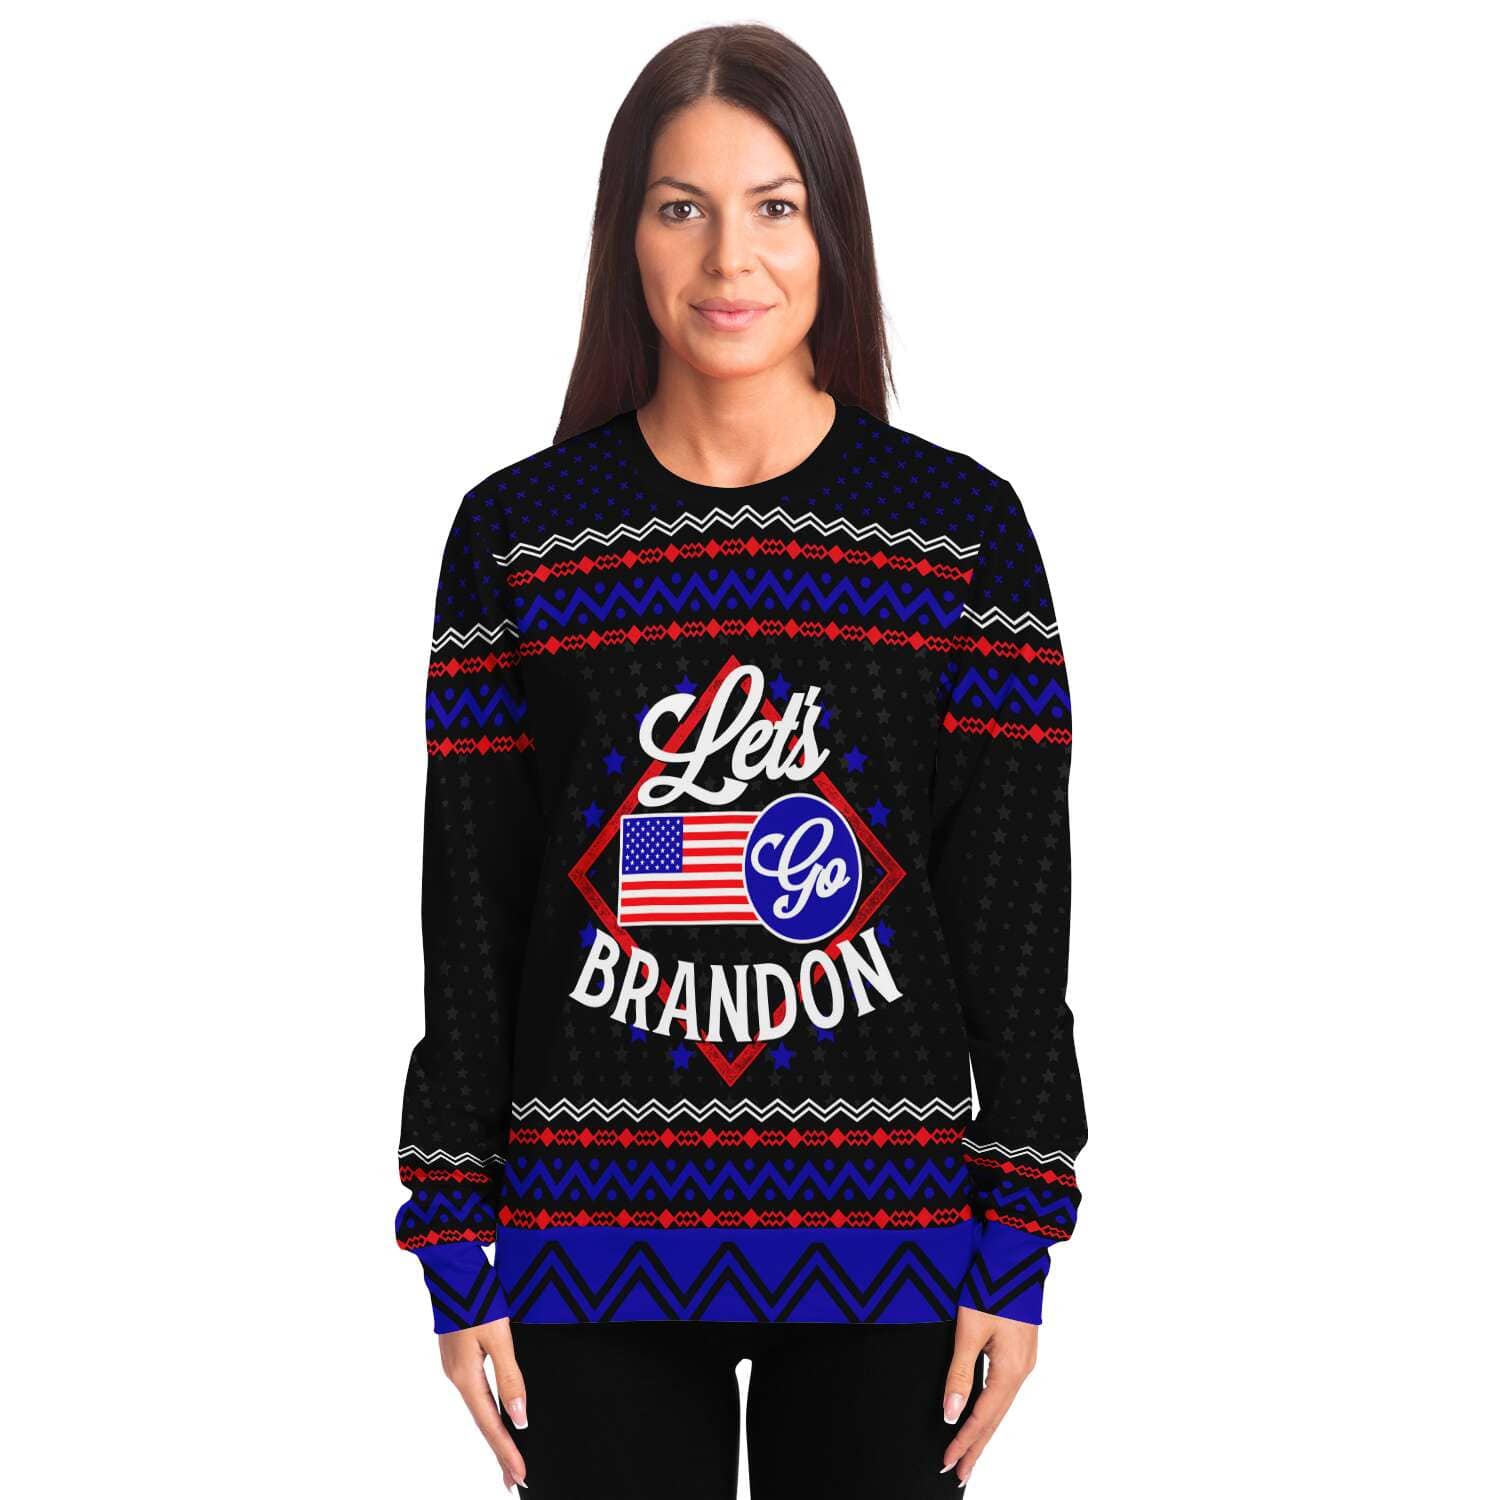 Let's Go Brandon - Funny Anti-Biden Republican Ugly Christmas Sweater (Sweatshirt)